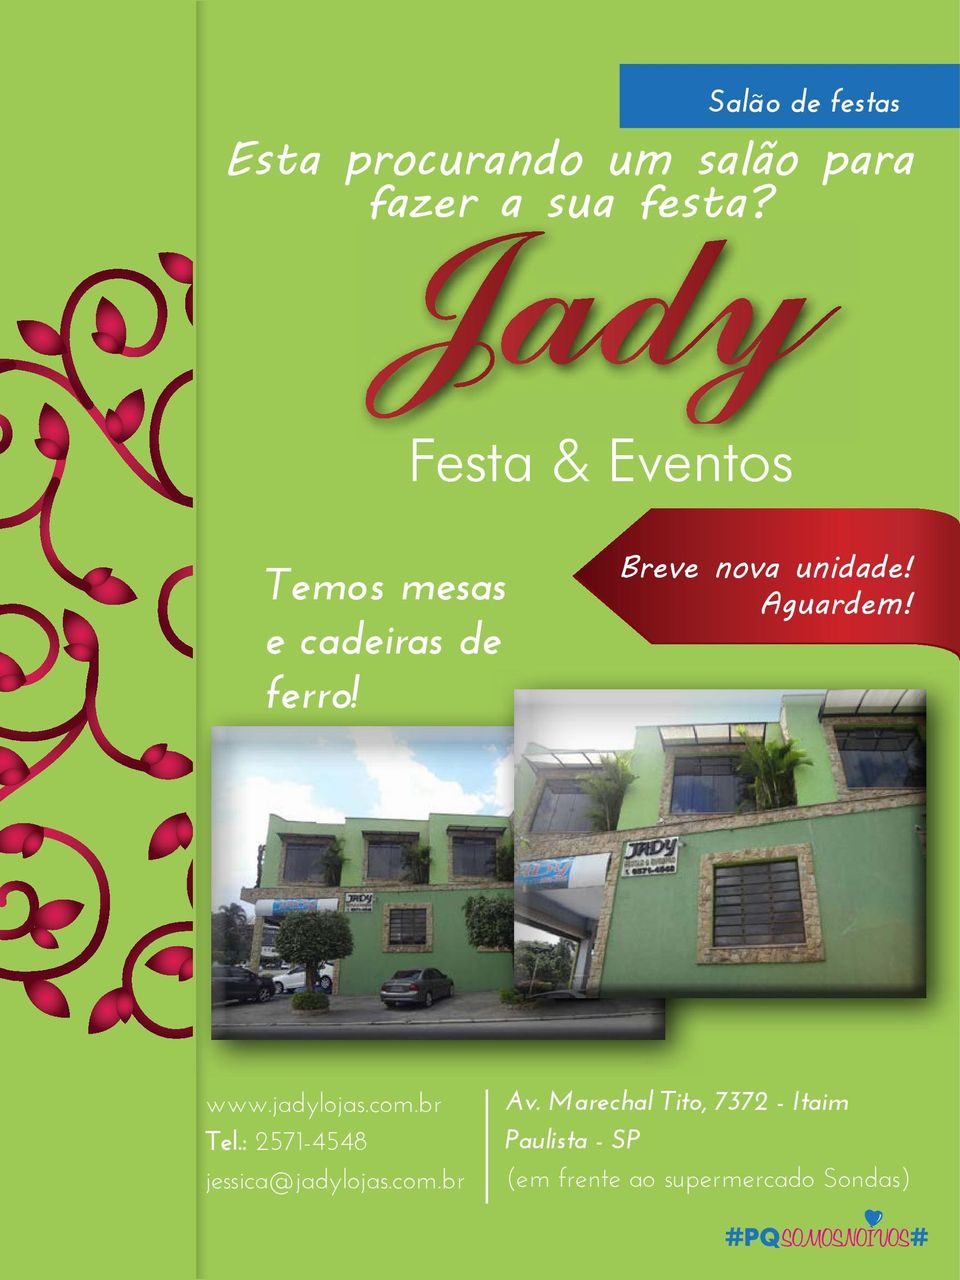 Aguardem! www.jadylojas.com.br Tel.: 2571-4548 jessica@jadylojas.com.br Av.